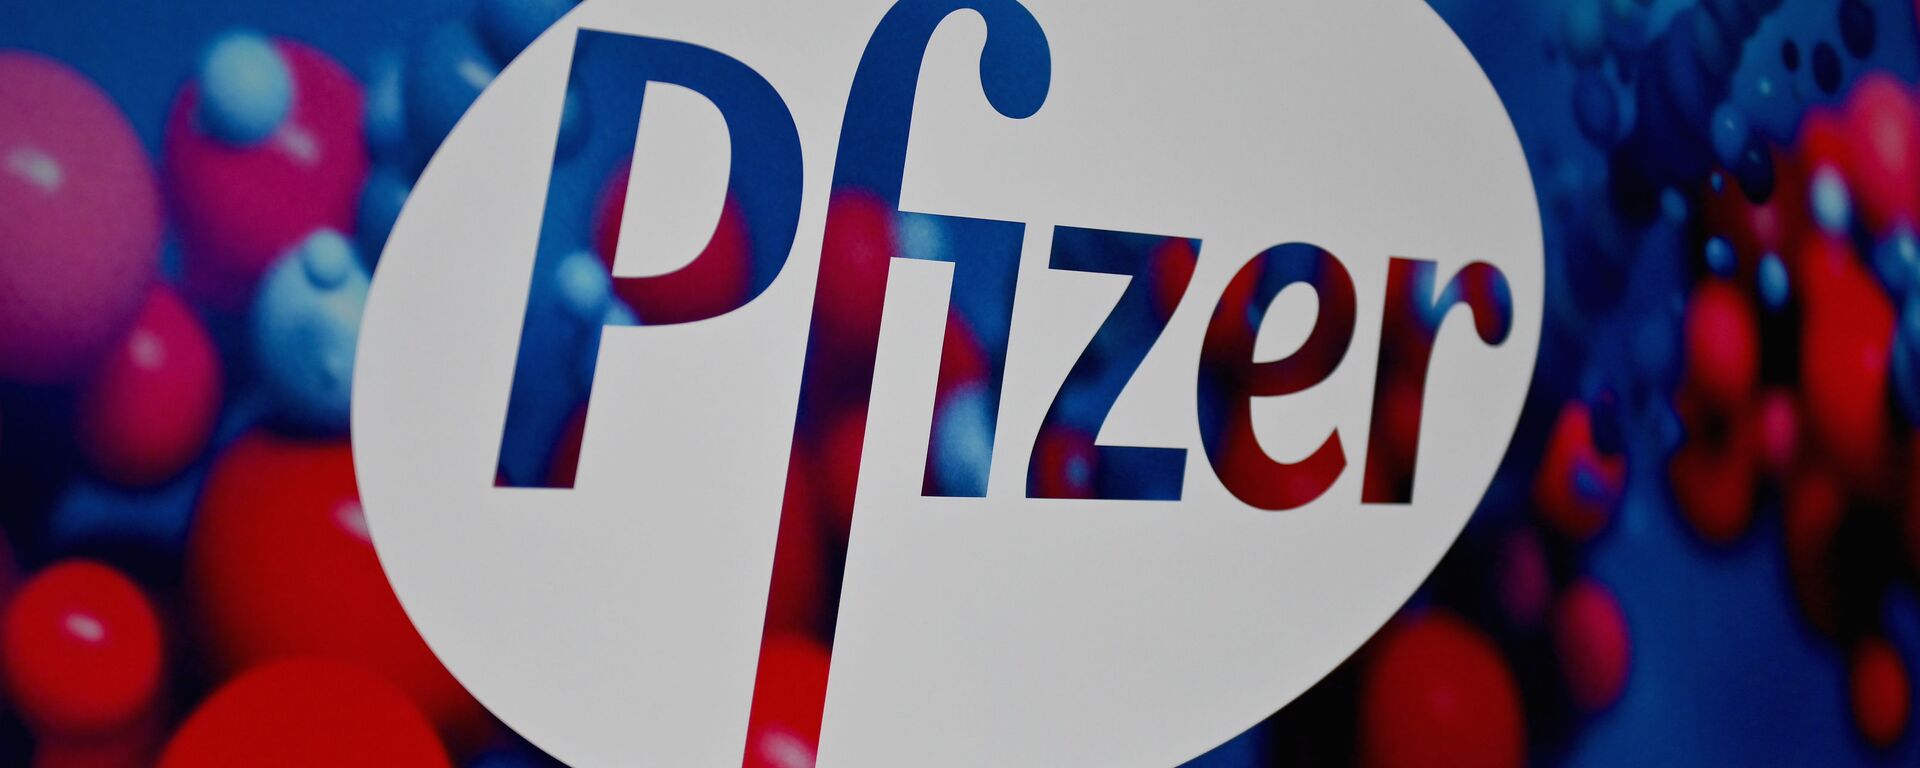 The Pfizer logo is seen at the Pfizer Inc. headquarters on December 9, 2020 in New York City - Sputnik International, 1920, 18.01.2021